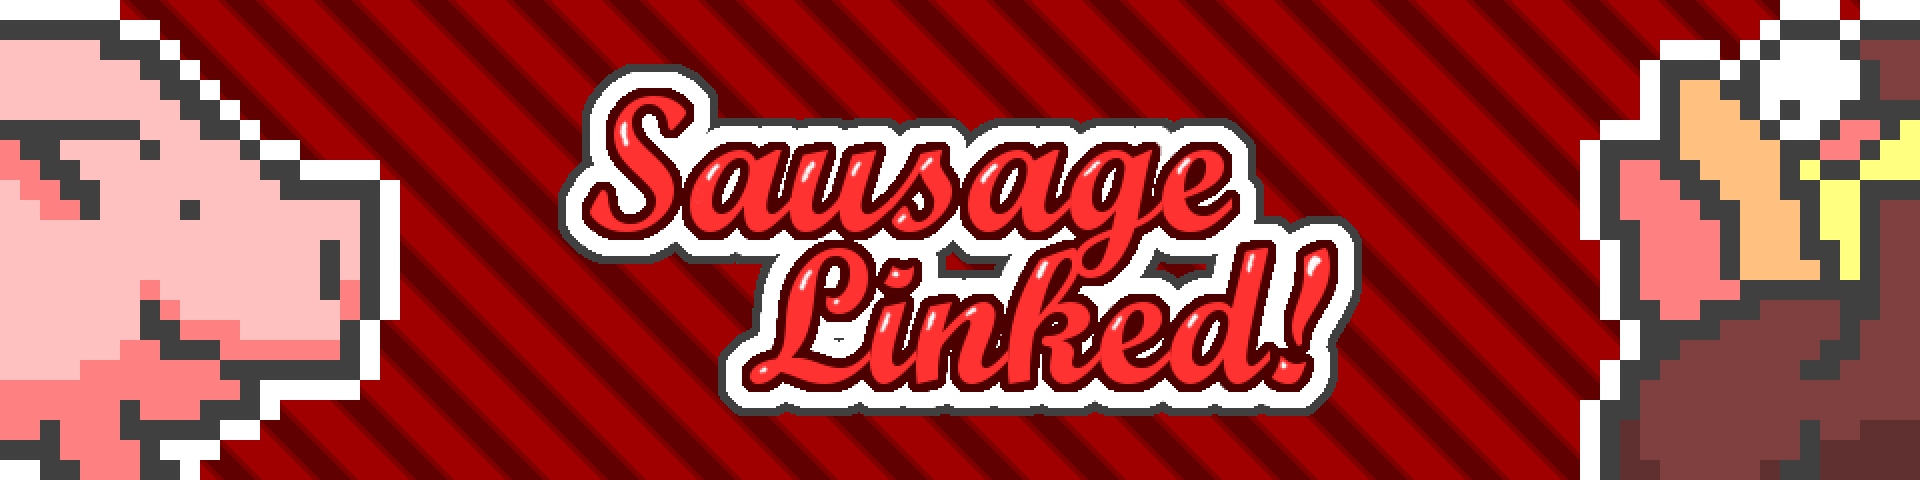 Sausage Linked!